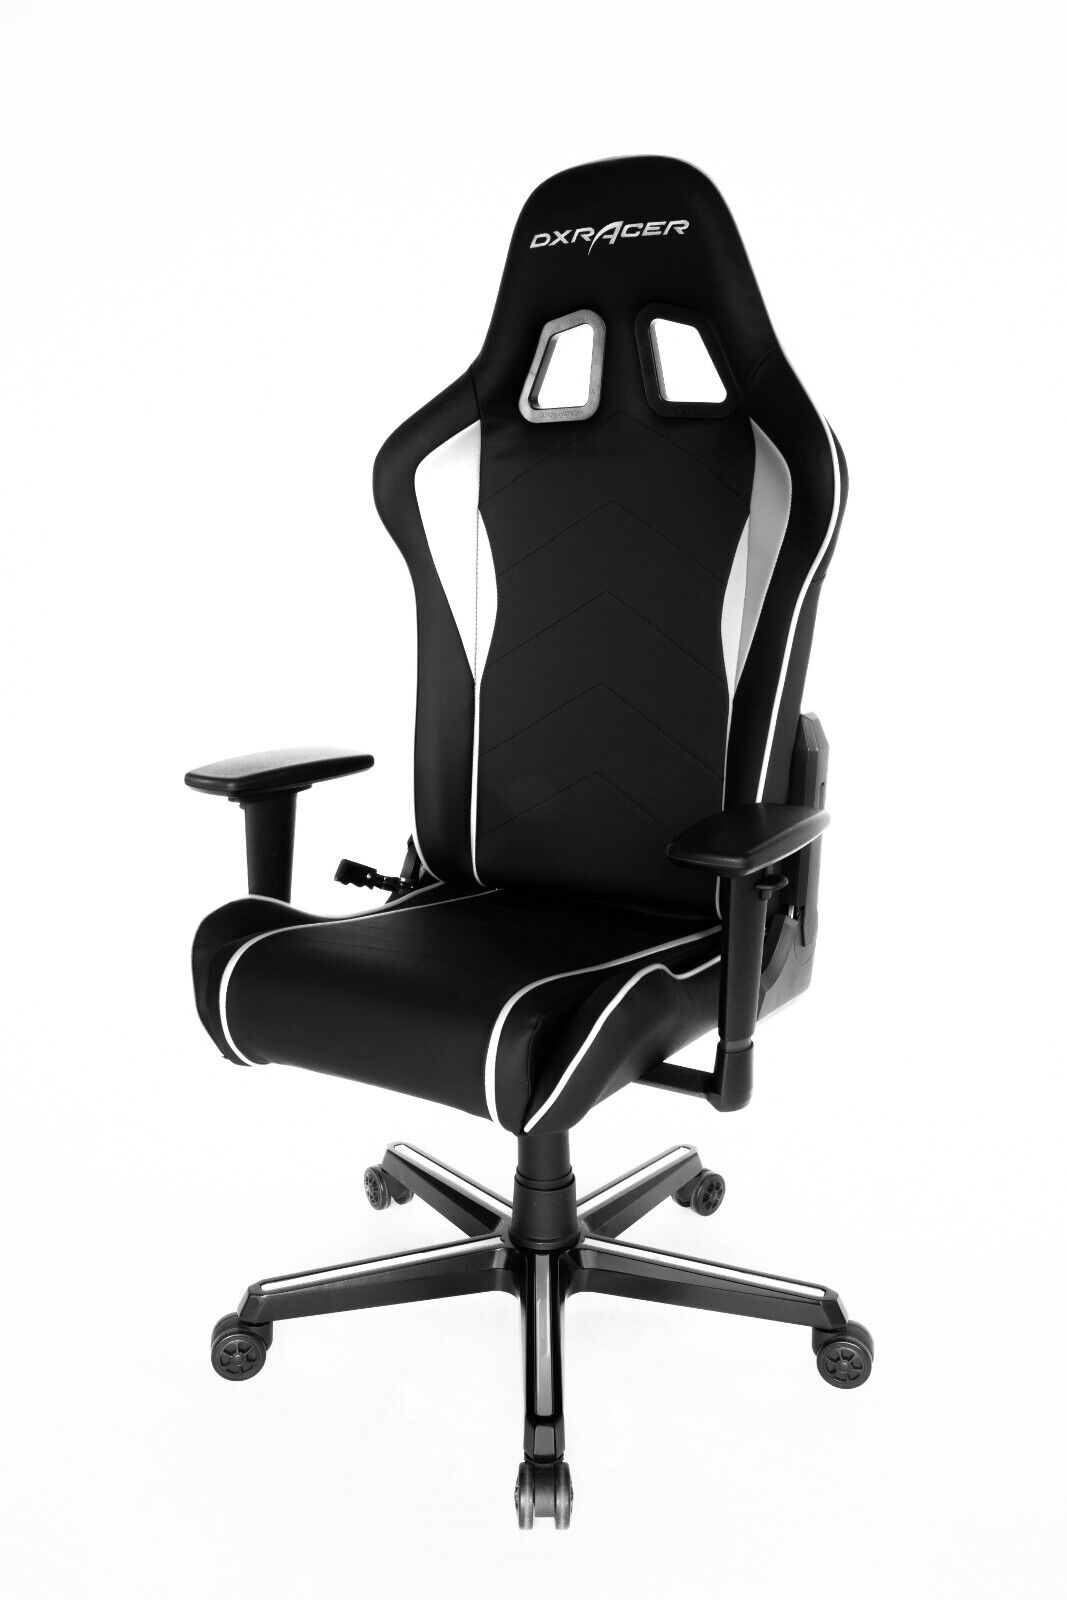 Gaming Stuhl Chair DX Racer P08-NW Chefsessel Bürostuhl schwarz weiß 2x Kissen